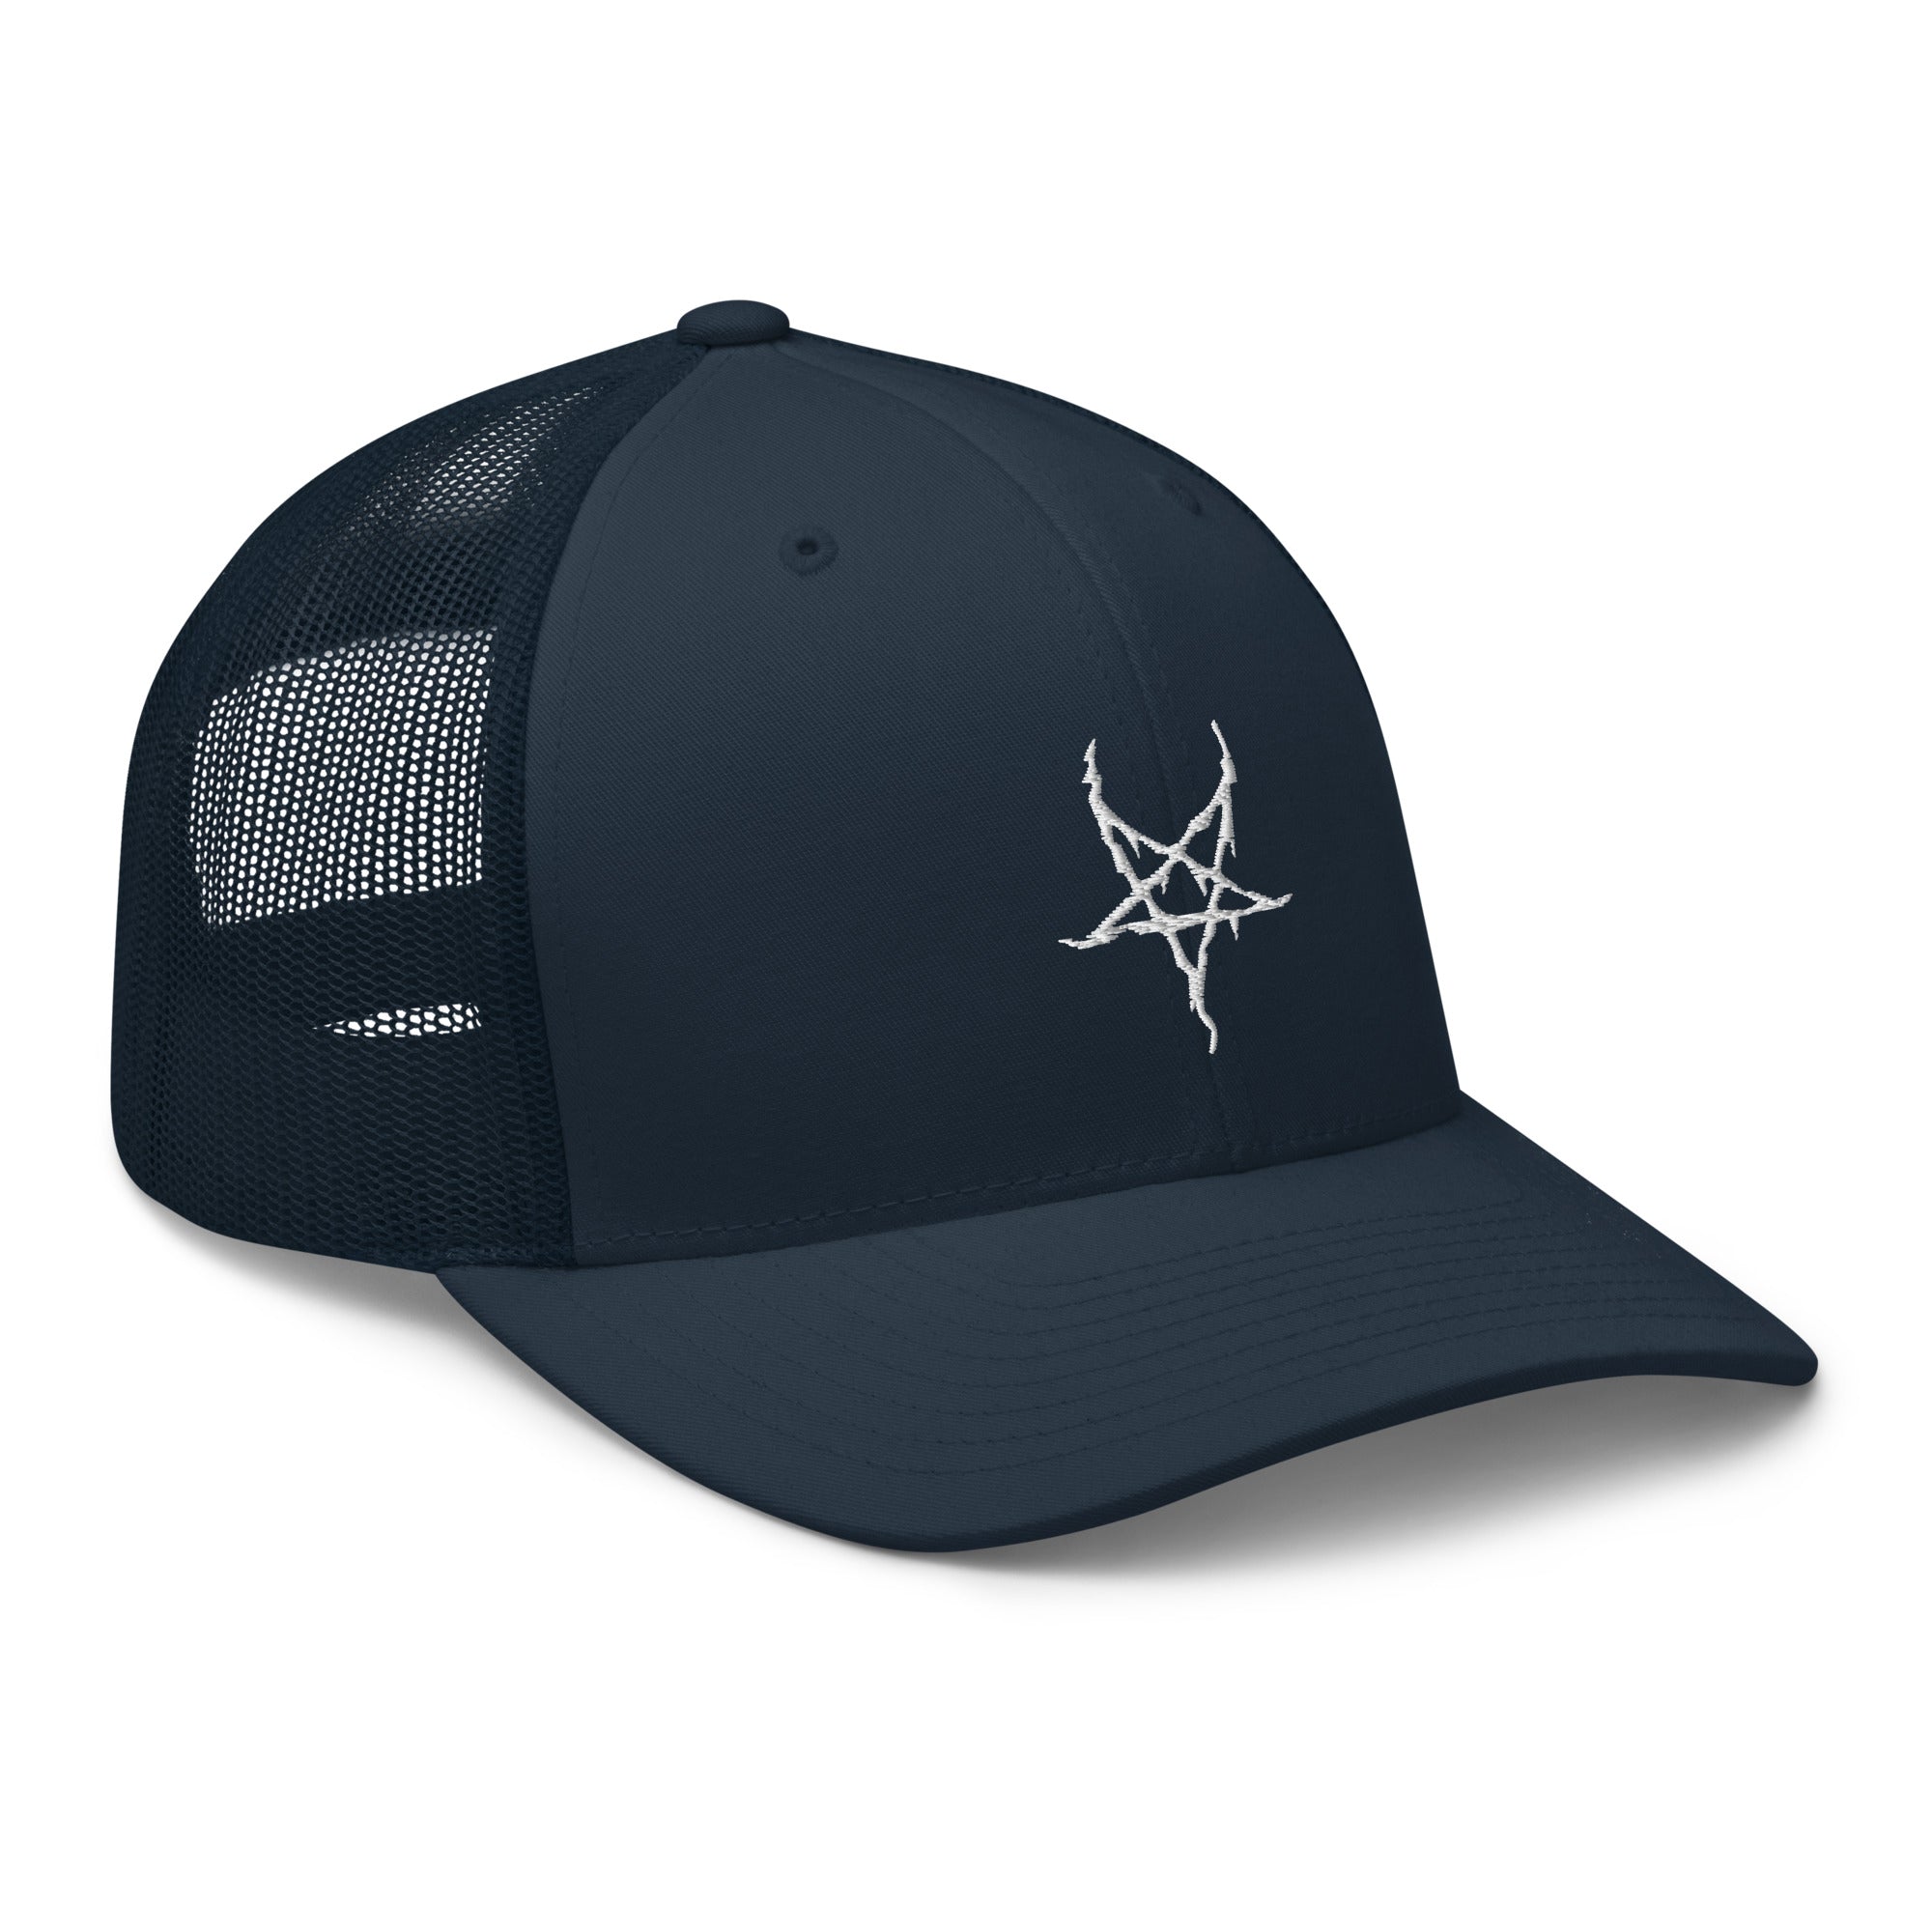 White Inverted Pentagram Black Metal Style Embroidered Trucker Cap Snapback Hat